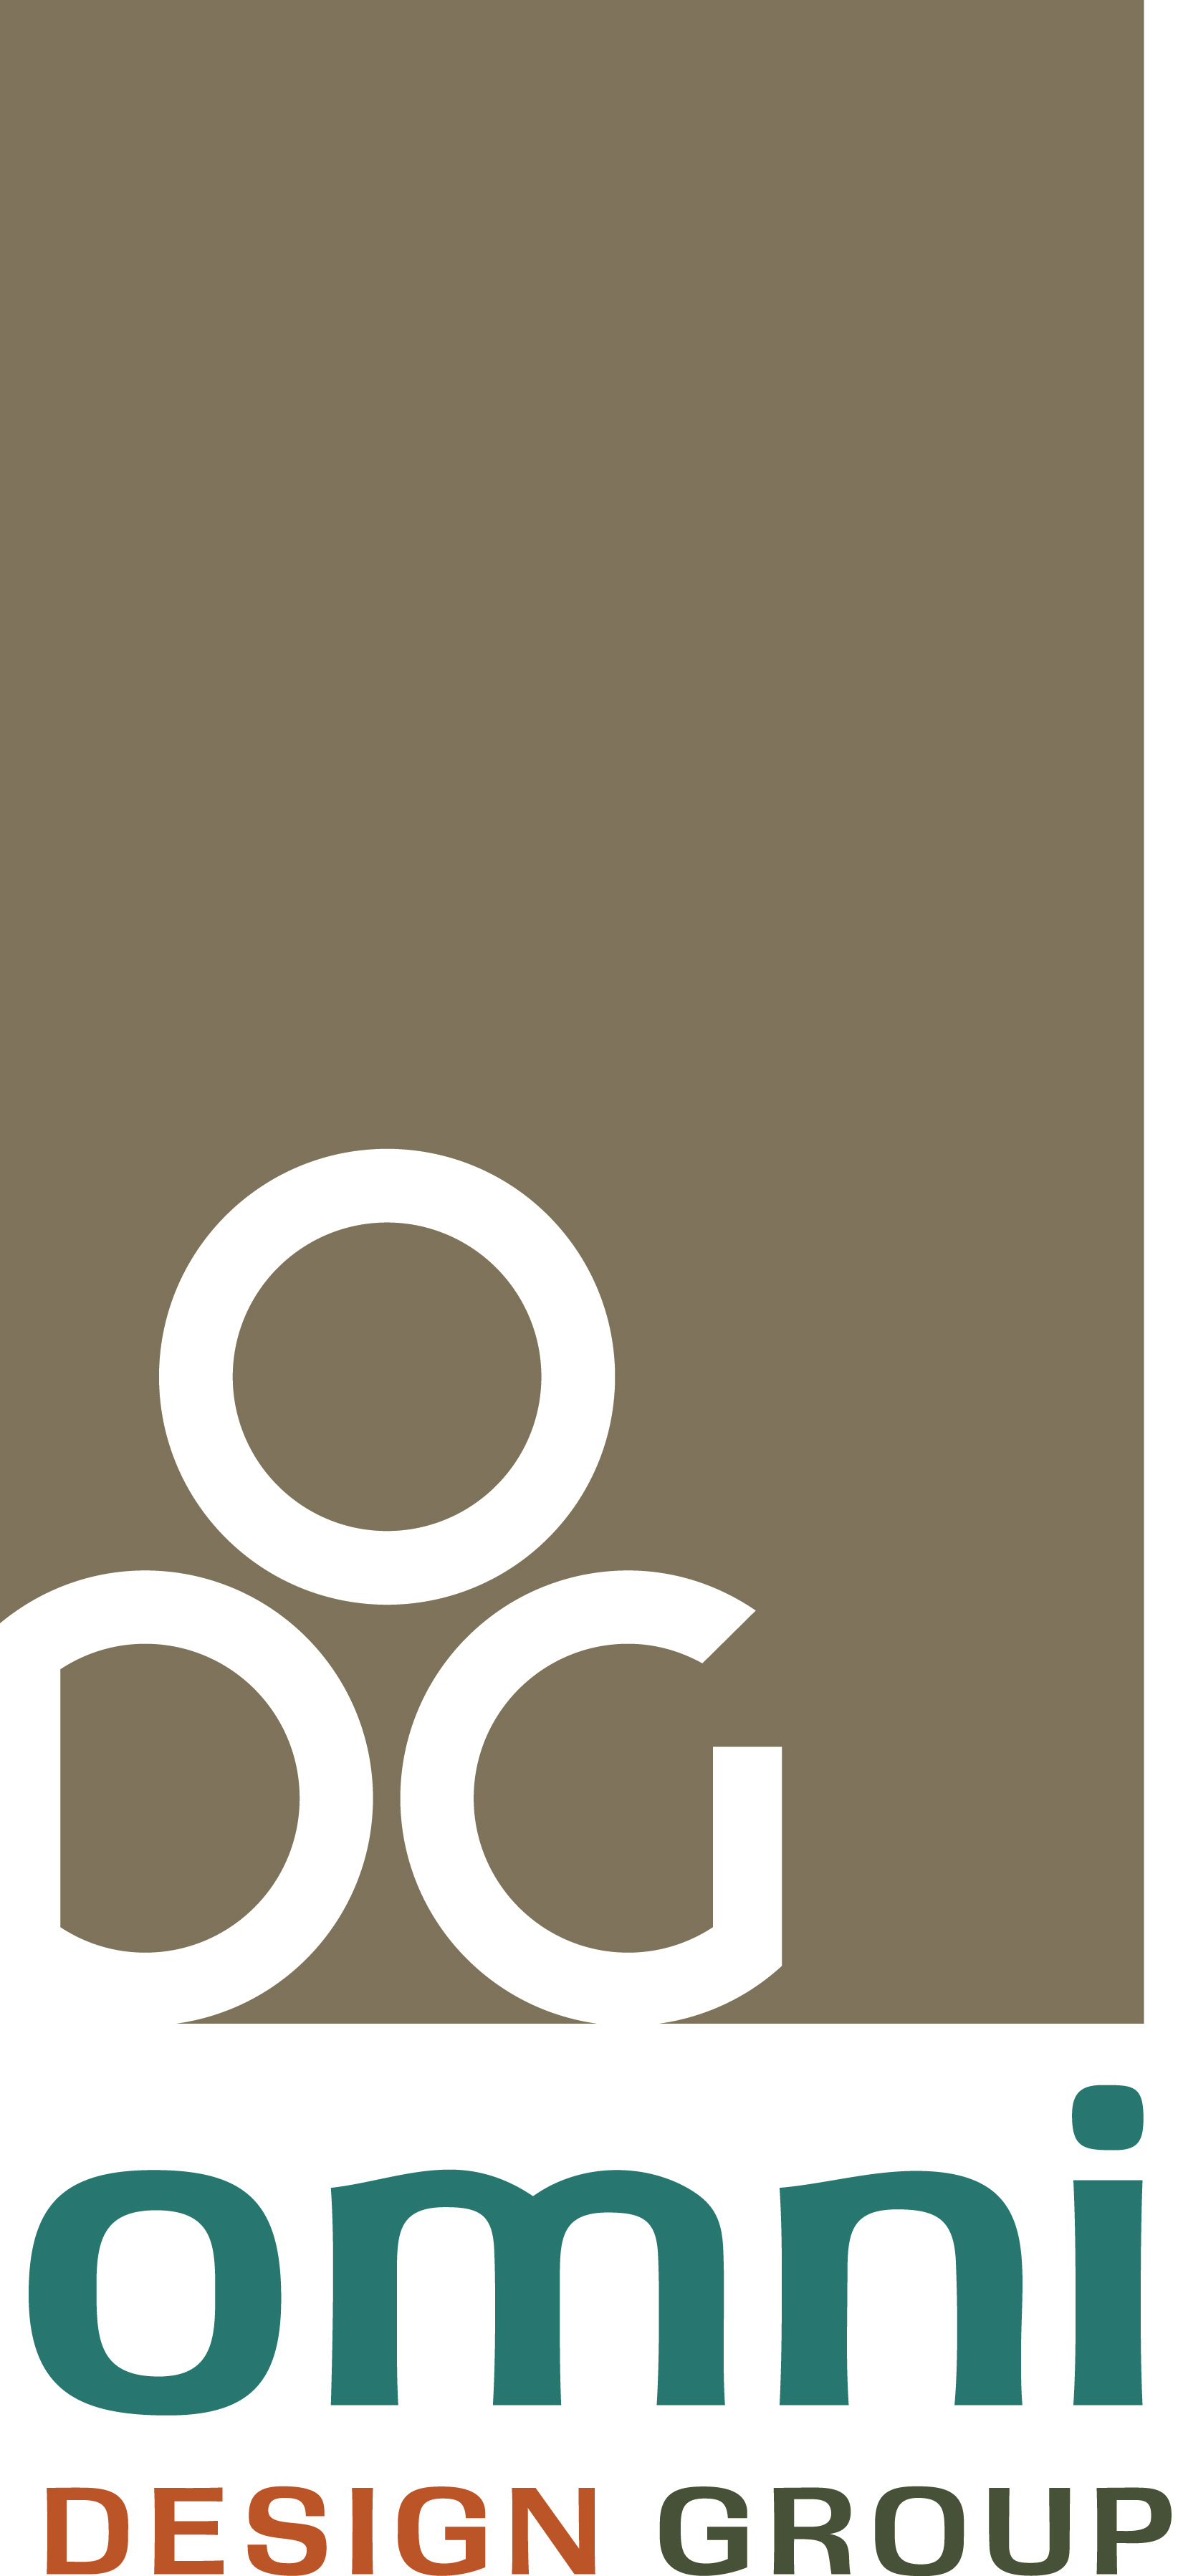 the Omni logo